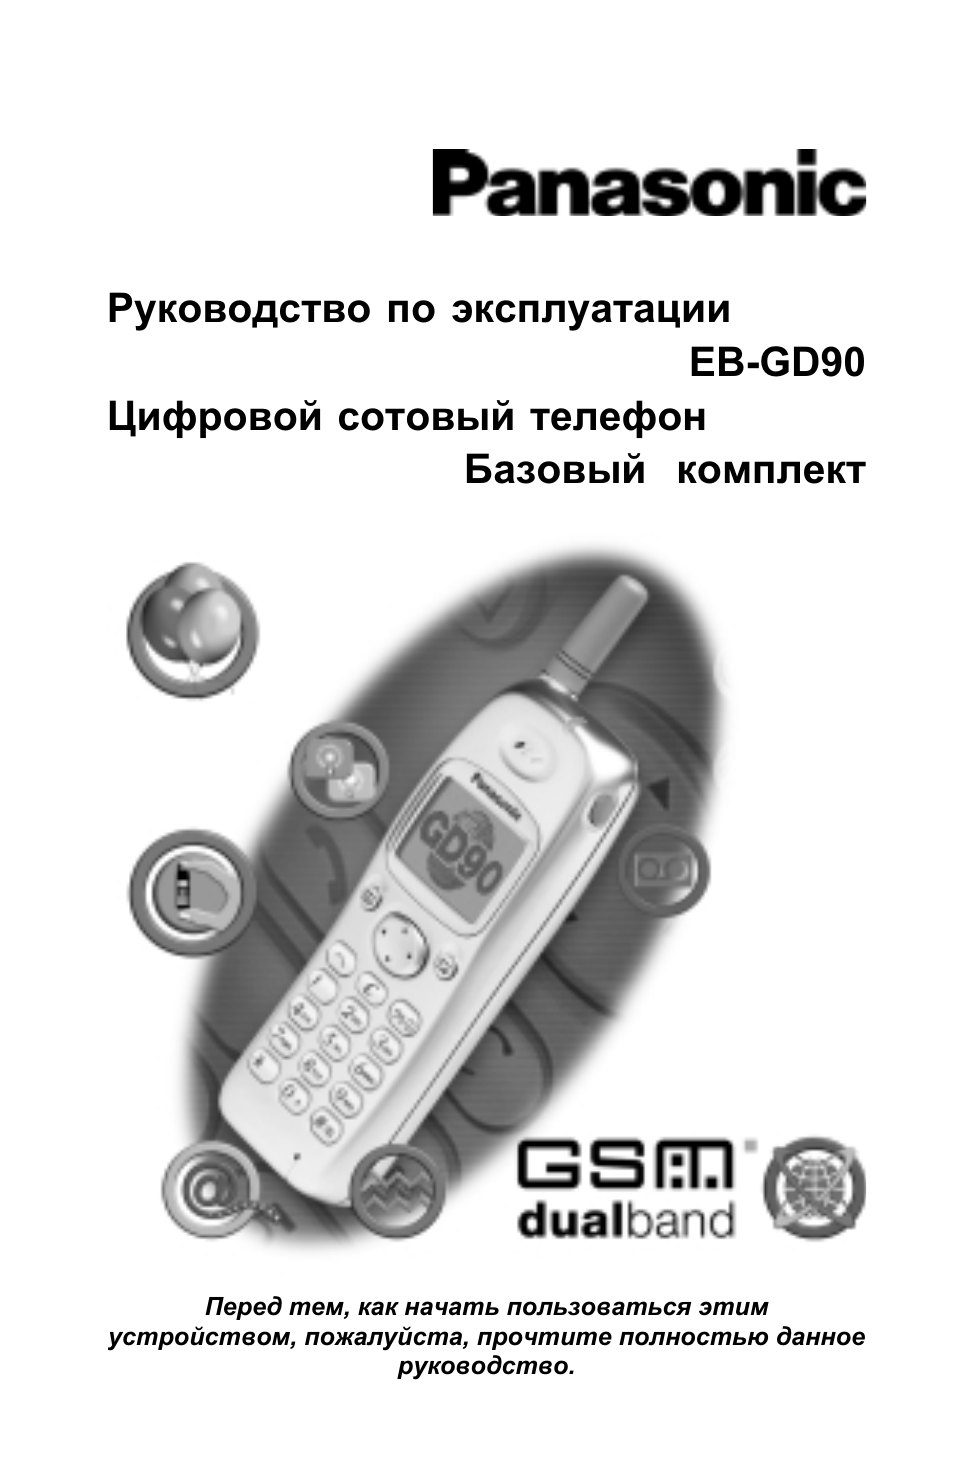 Инструкция по эксплуатации Panasonic EB-GD90  RU | 60 страниц